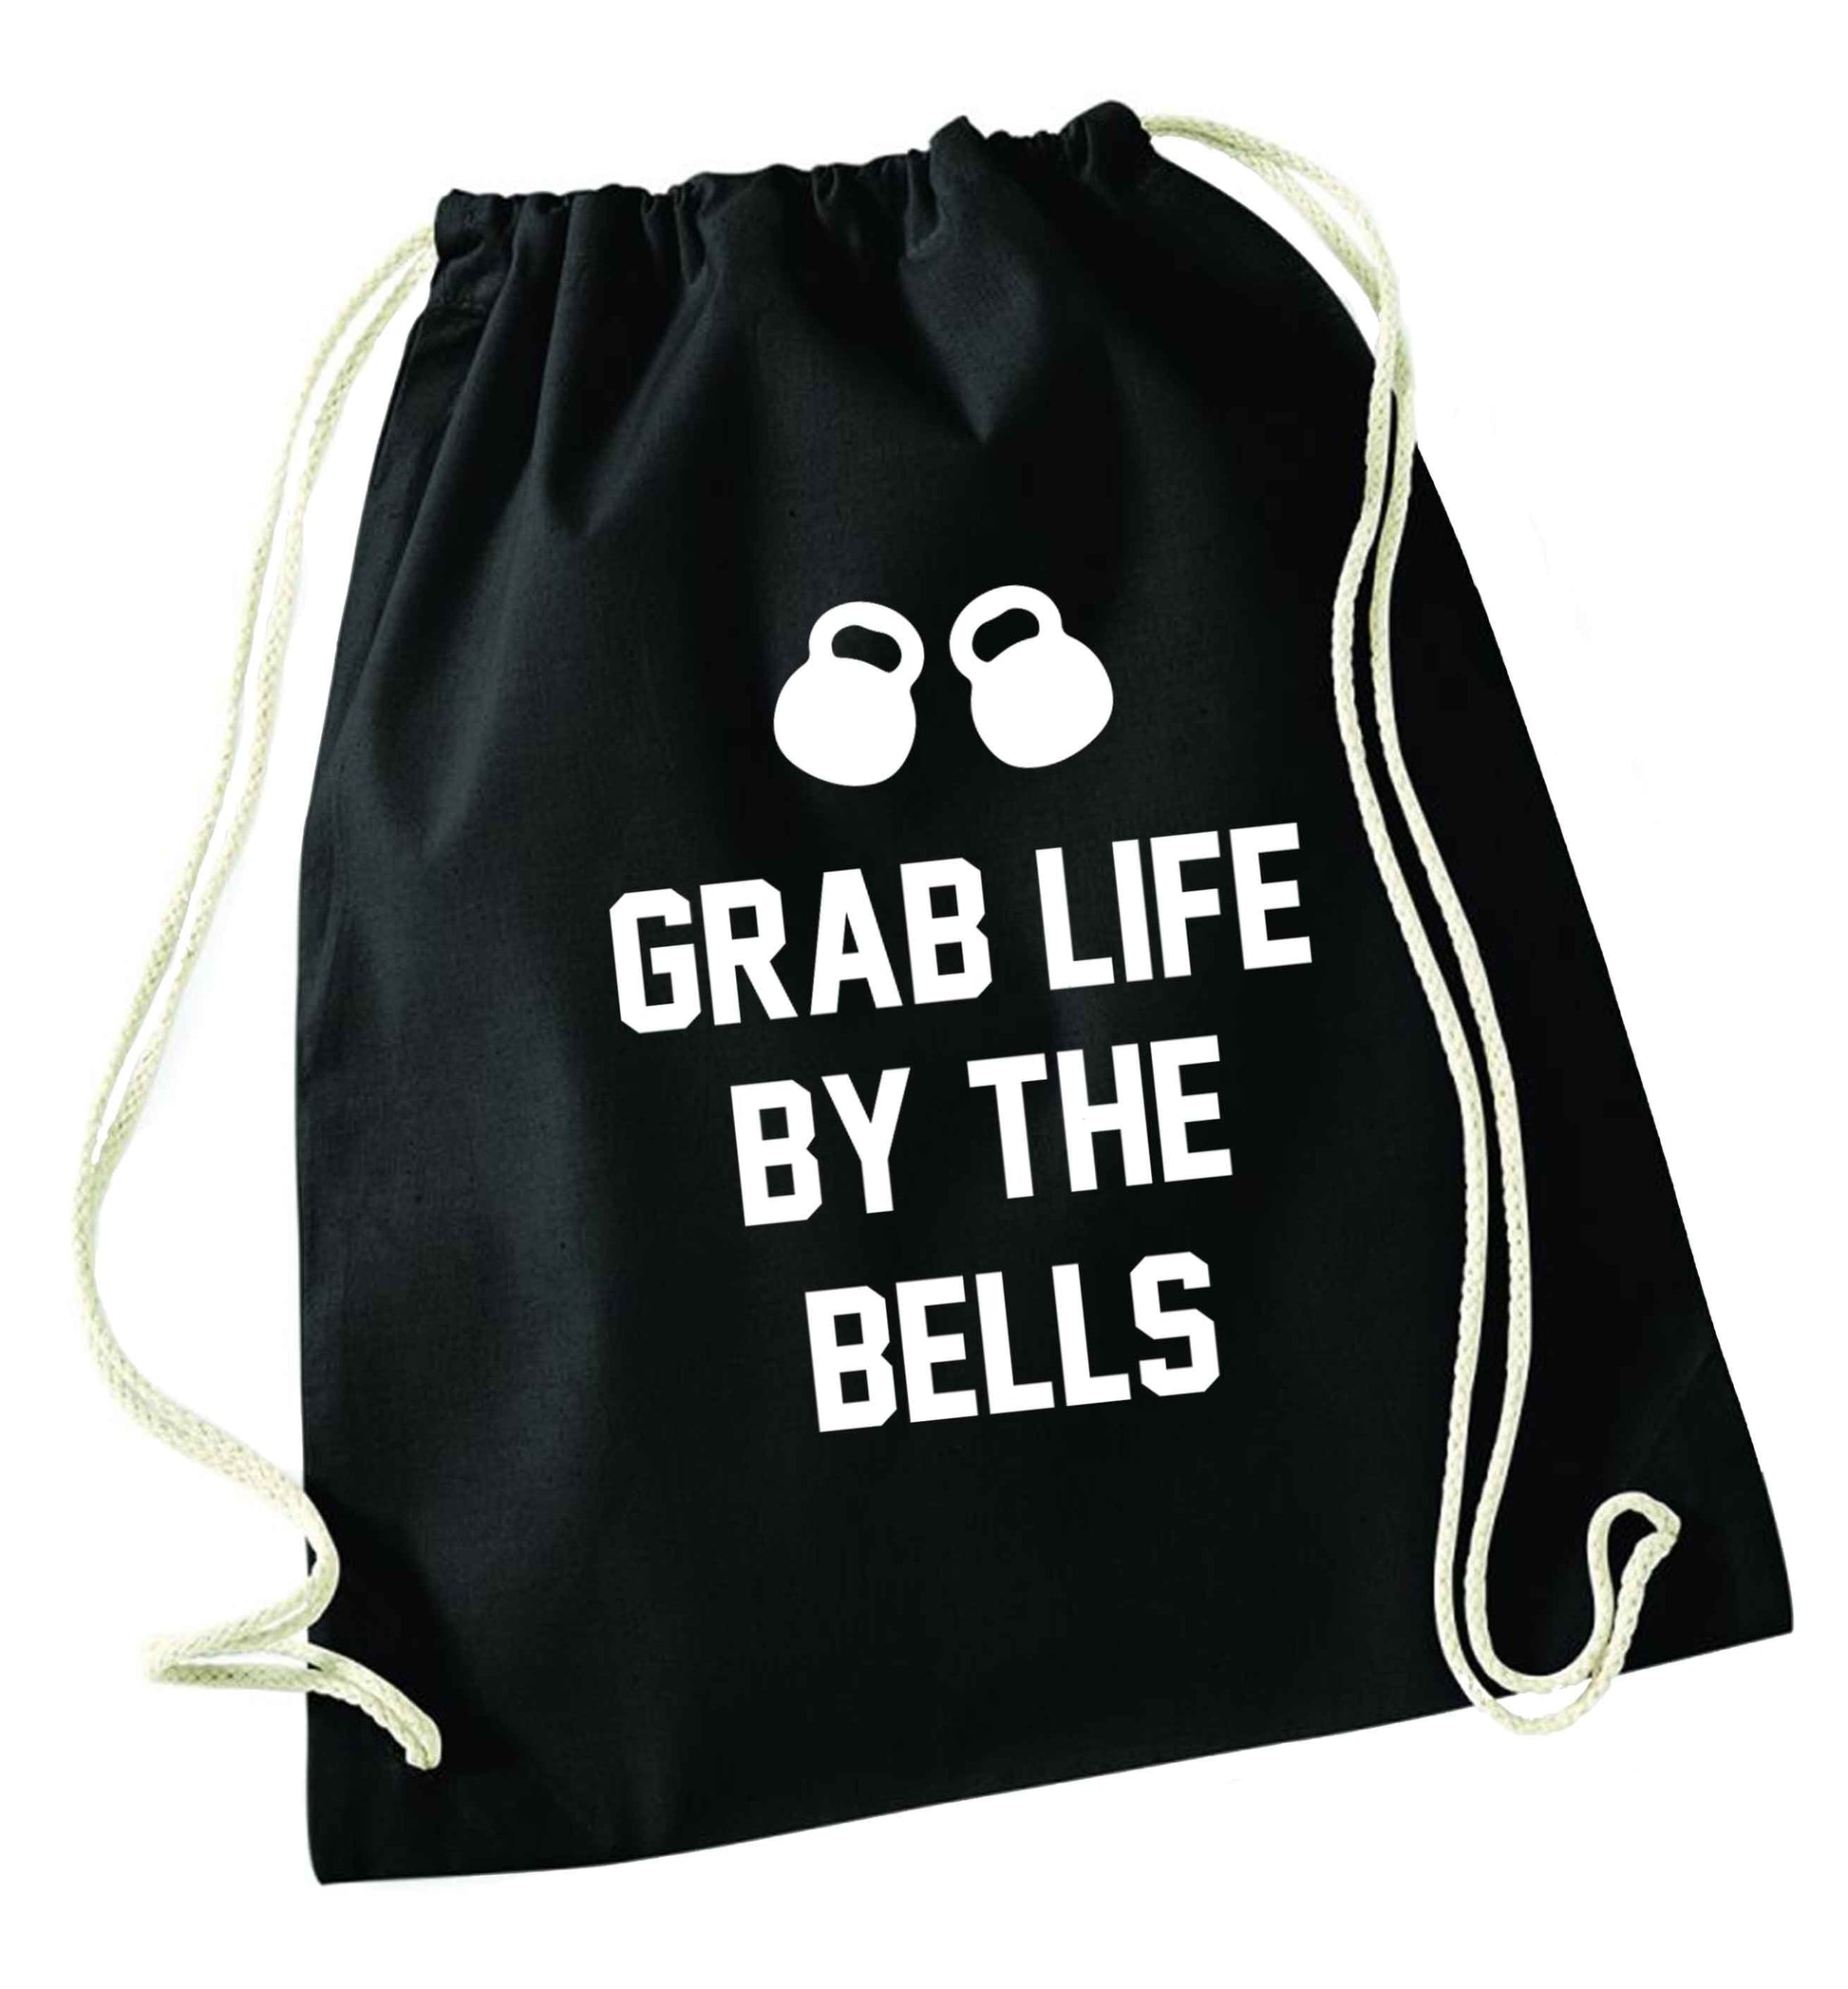 Grab life by the bells black drawstring bag